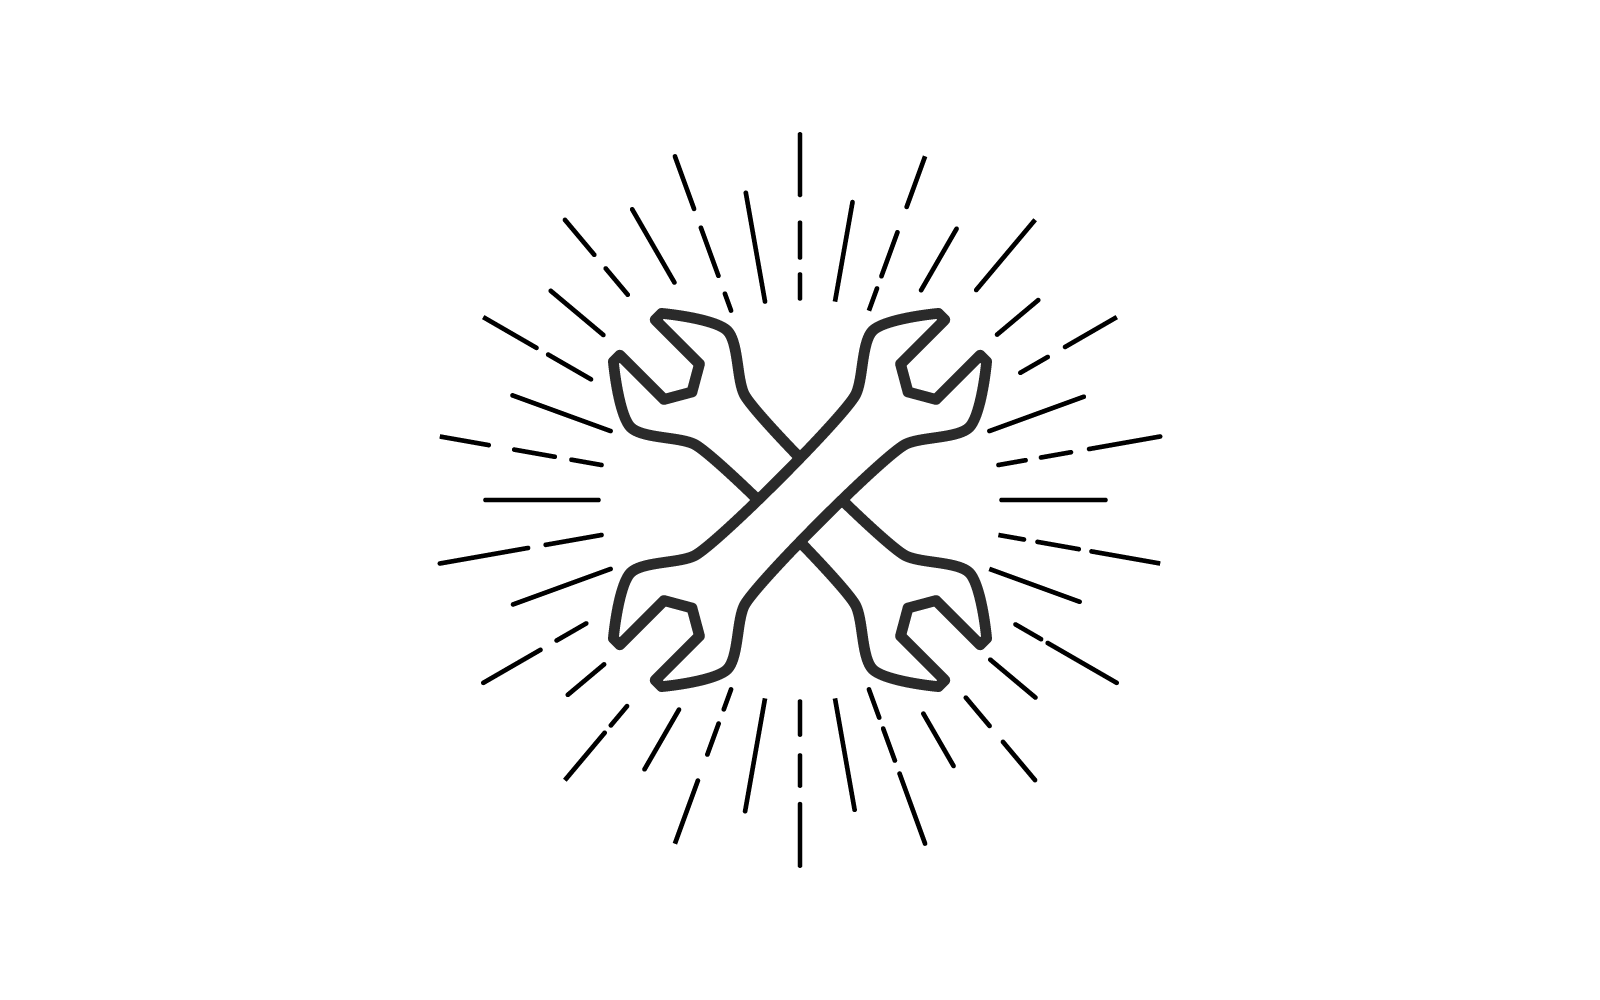 Wrench logo illustration vector design